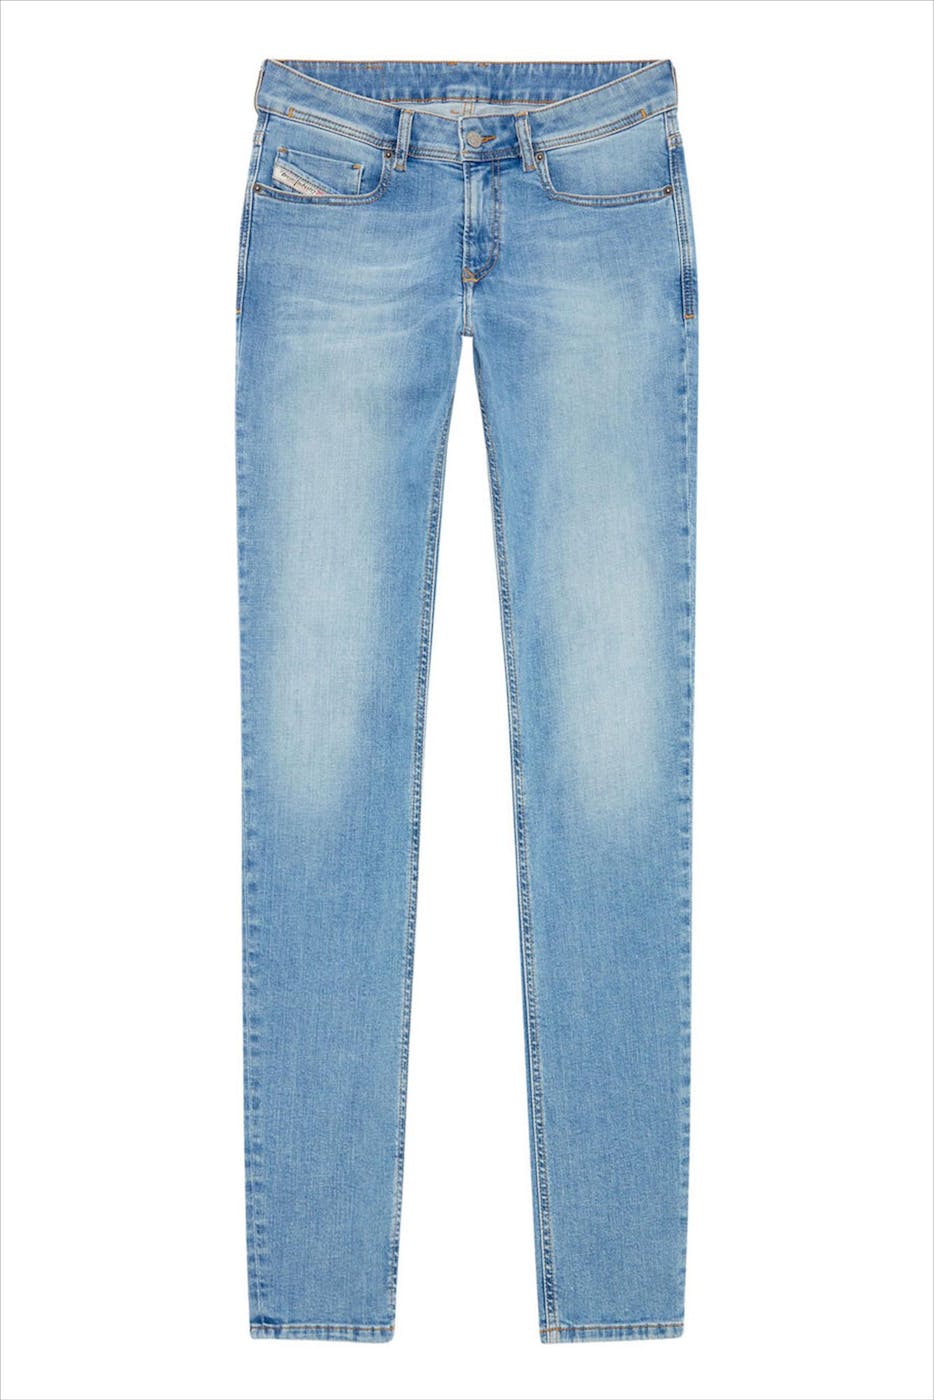 Diesel - Lichtblauwe 1979 Sleenker jeans